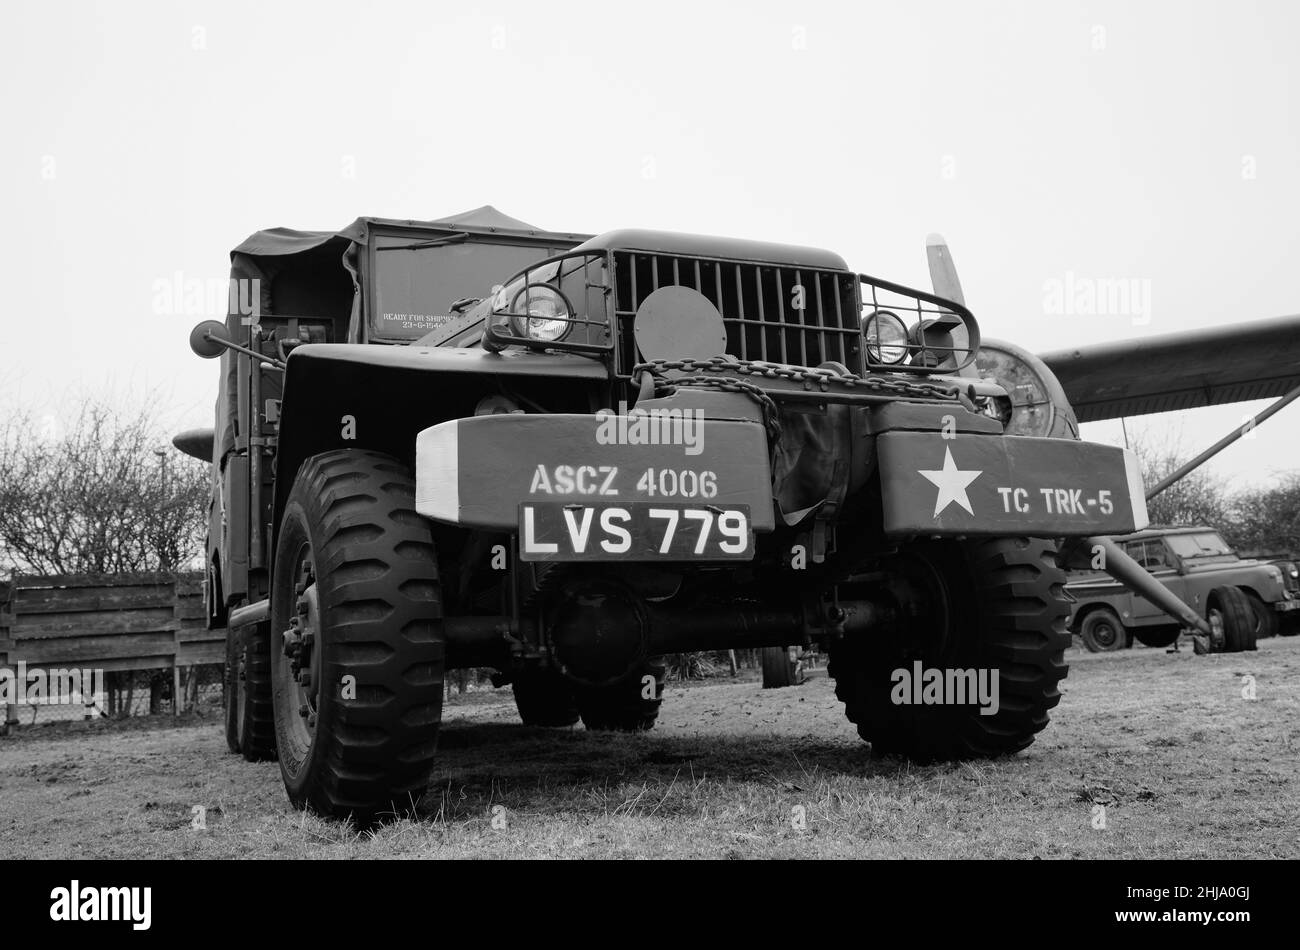 Vintage WW2 American truck on display Stock Photo